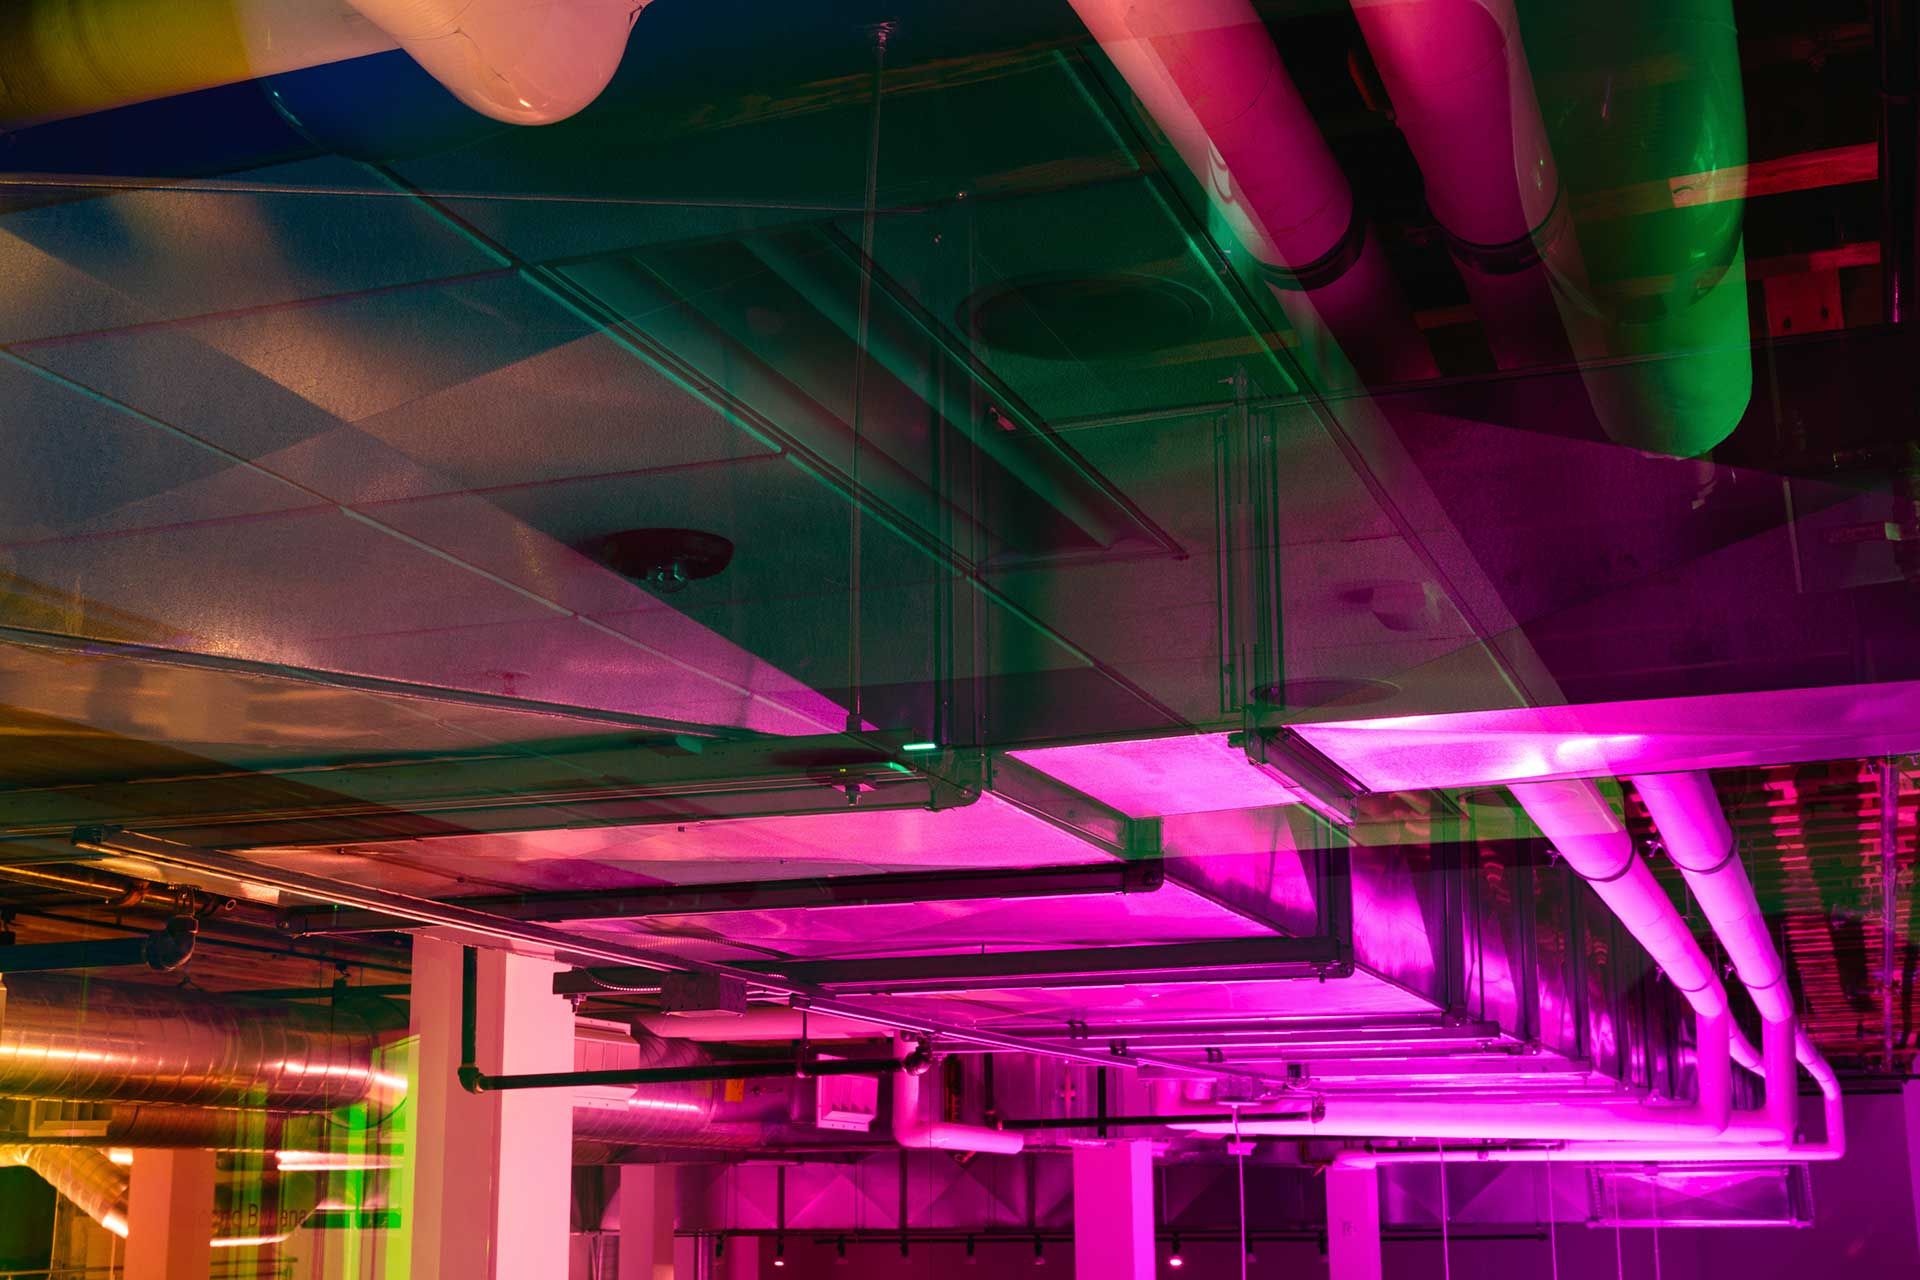 Lyserødt lys, der lyser på loftet og viser aiconditionkanaler